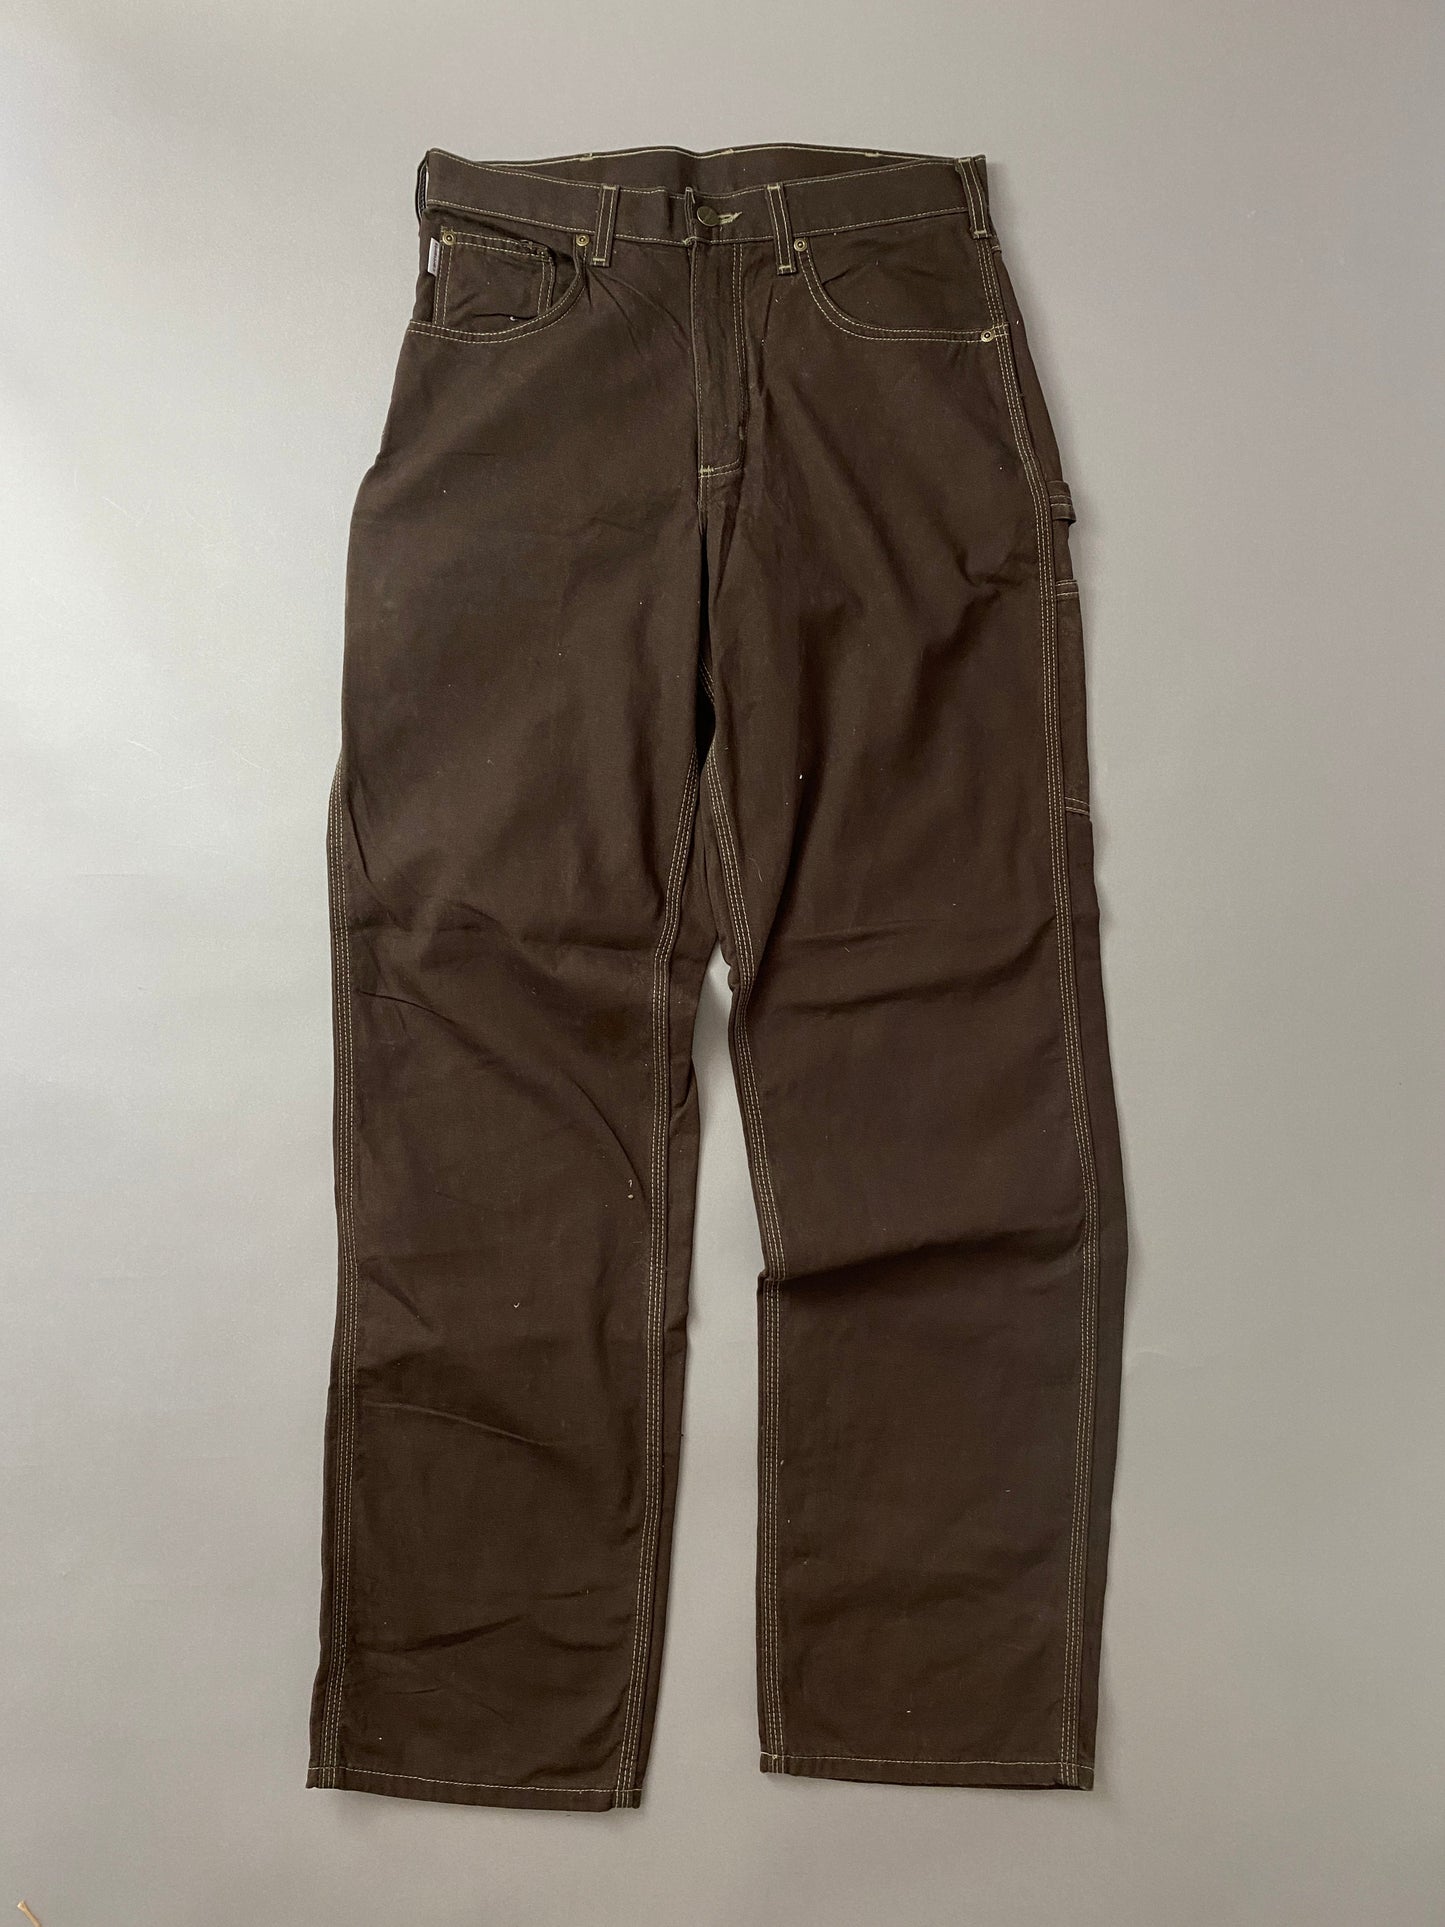 Carhartt Carpenter Pants - 30 x 30